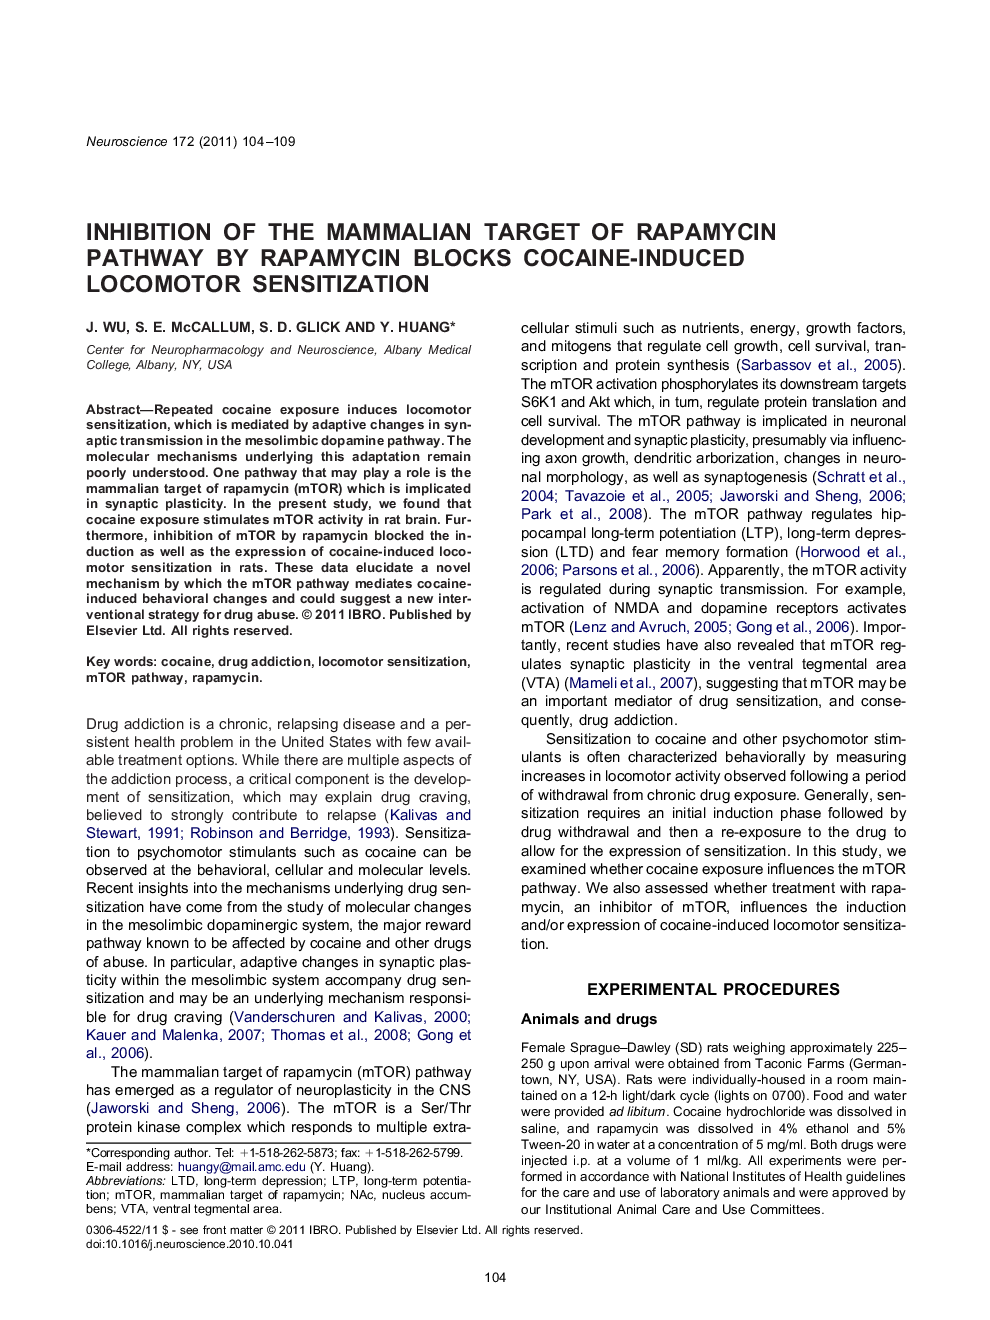 Inhibition of the mammalian target of rapamycin pathway by rapamycin blocks cocaine-induced locomotor sensitization